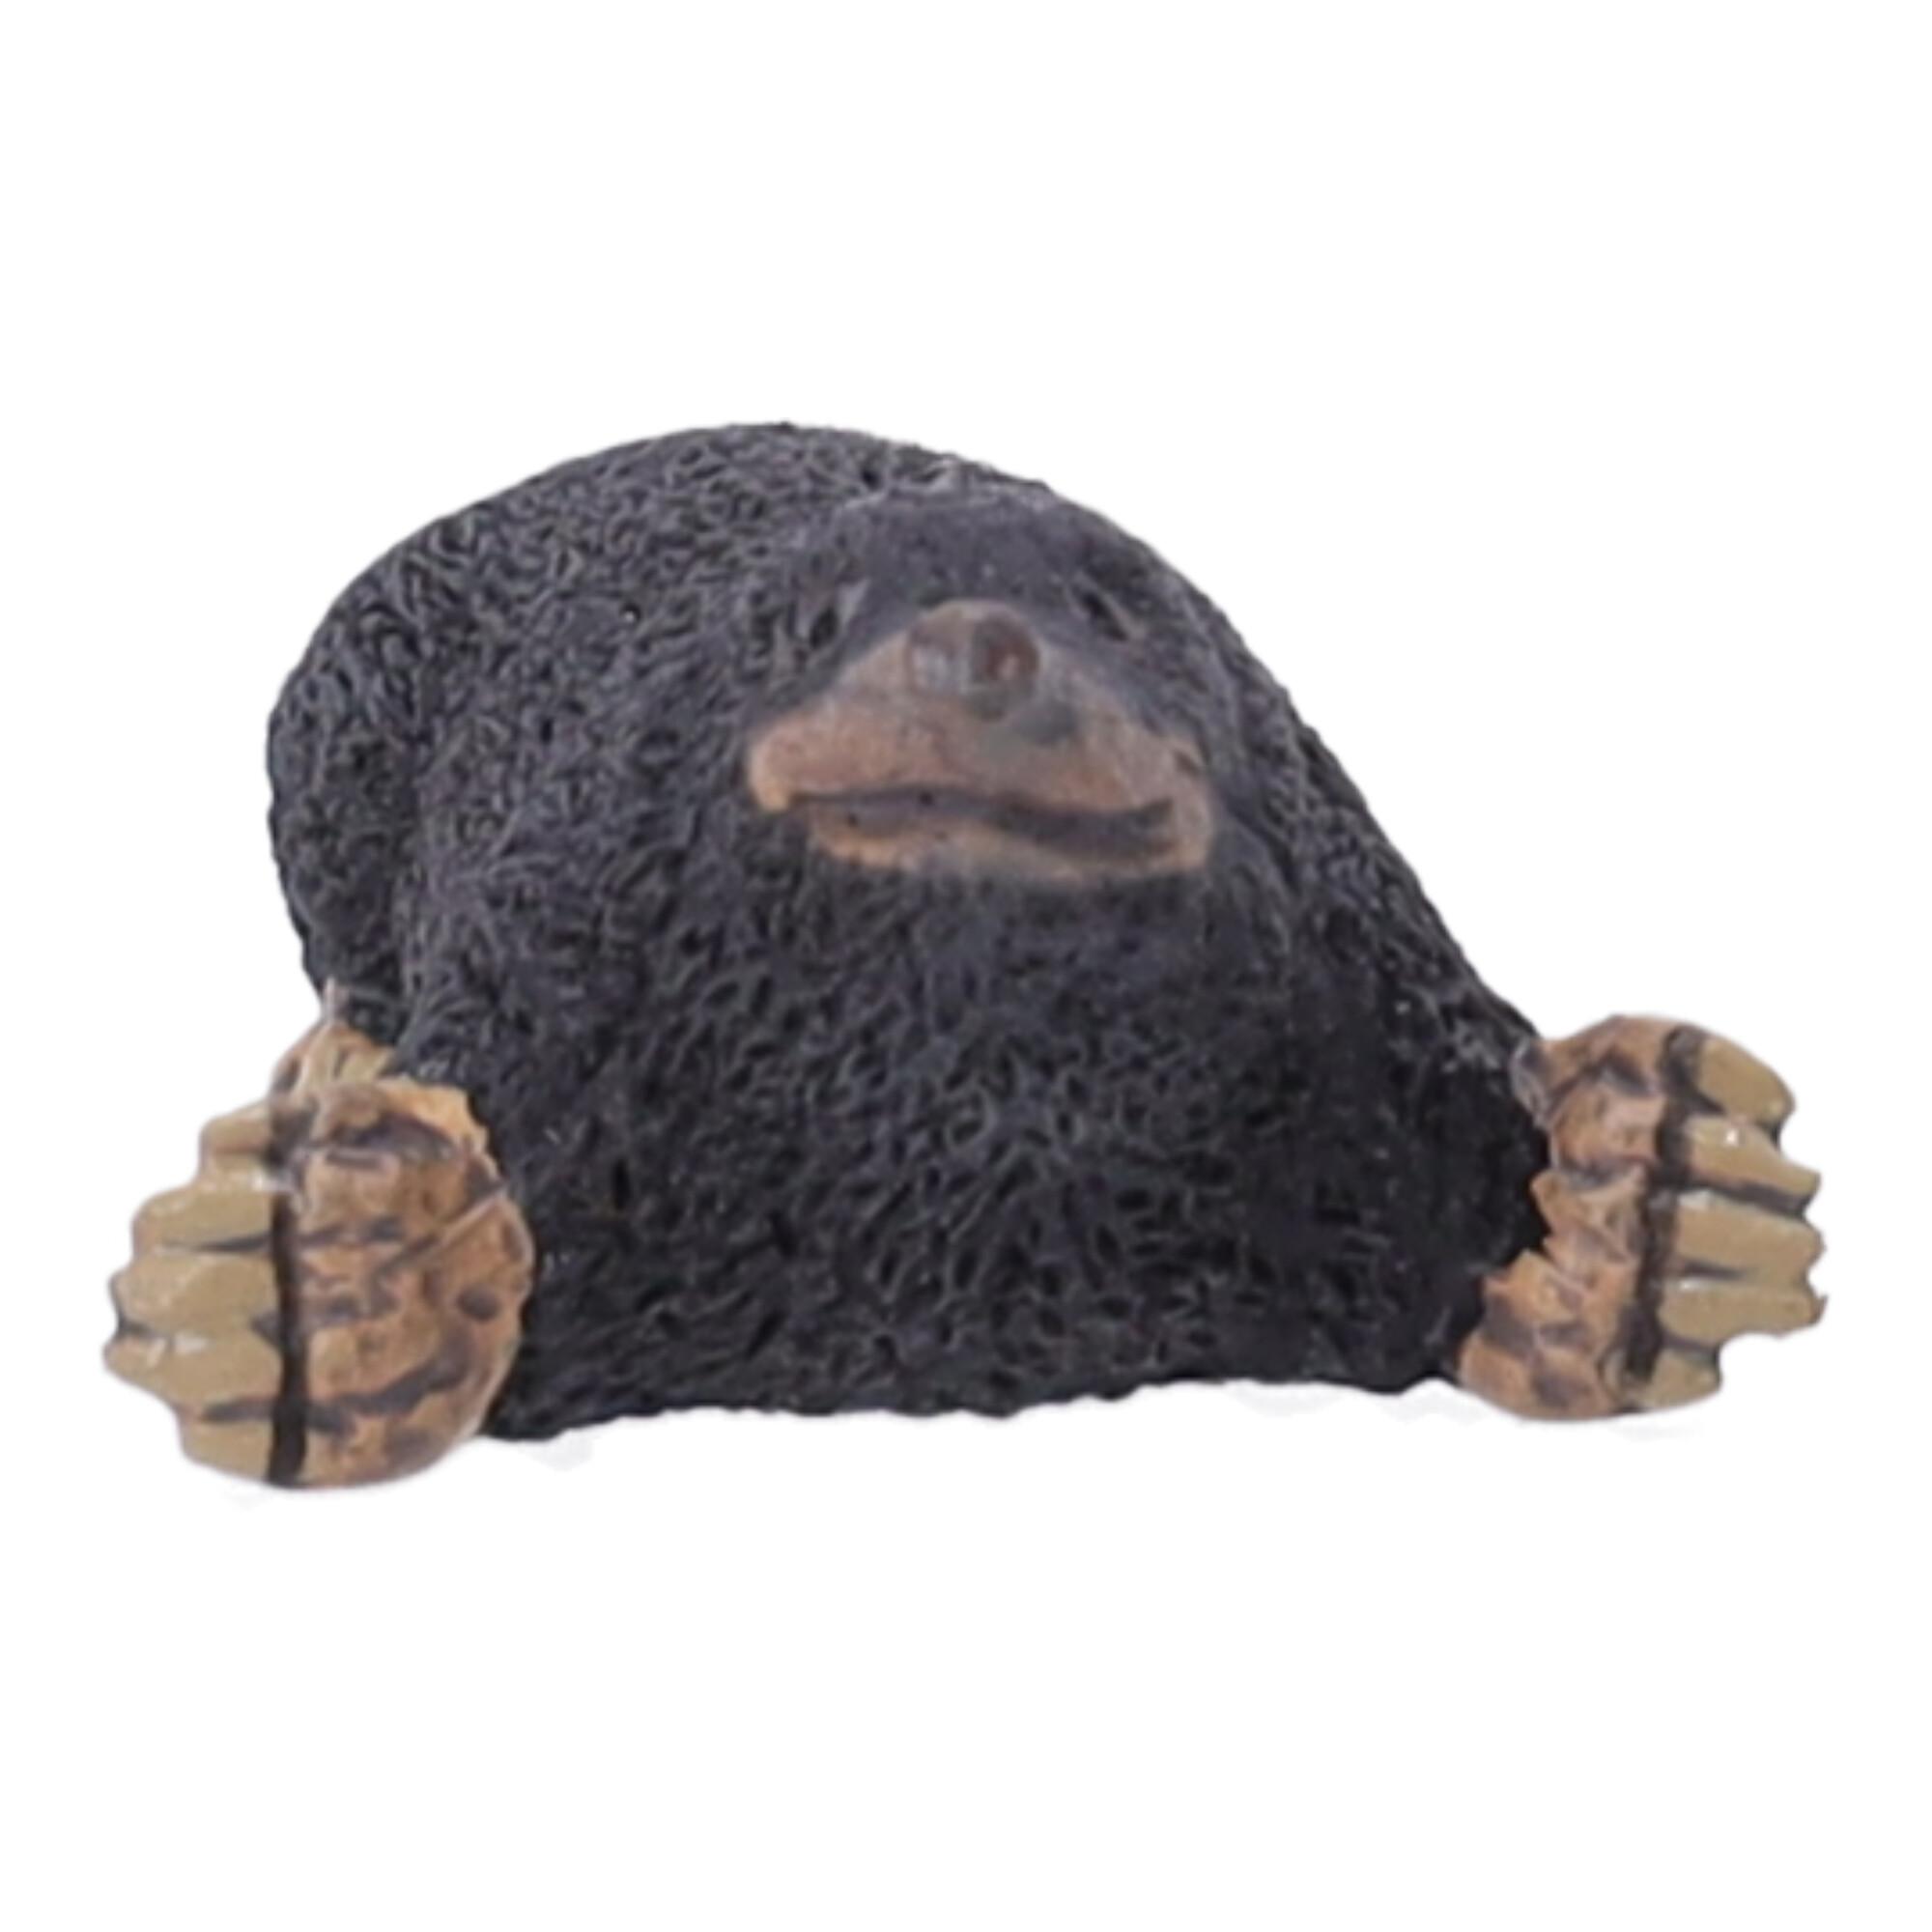 Collectible figurine Mole, Papo